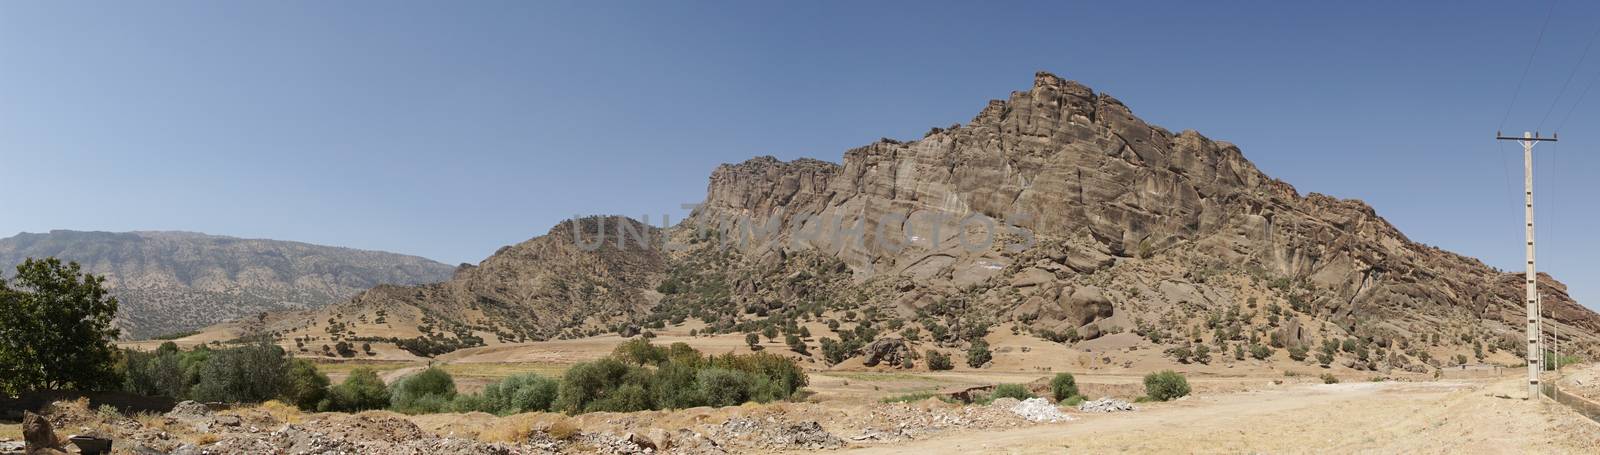 Landscape, Lorestan, Iran, Asia by alfotokunst